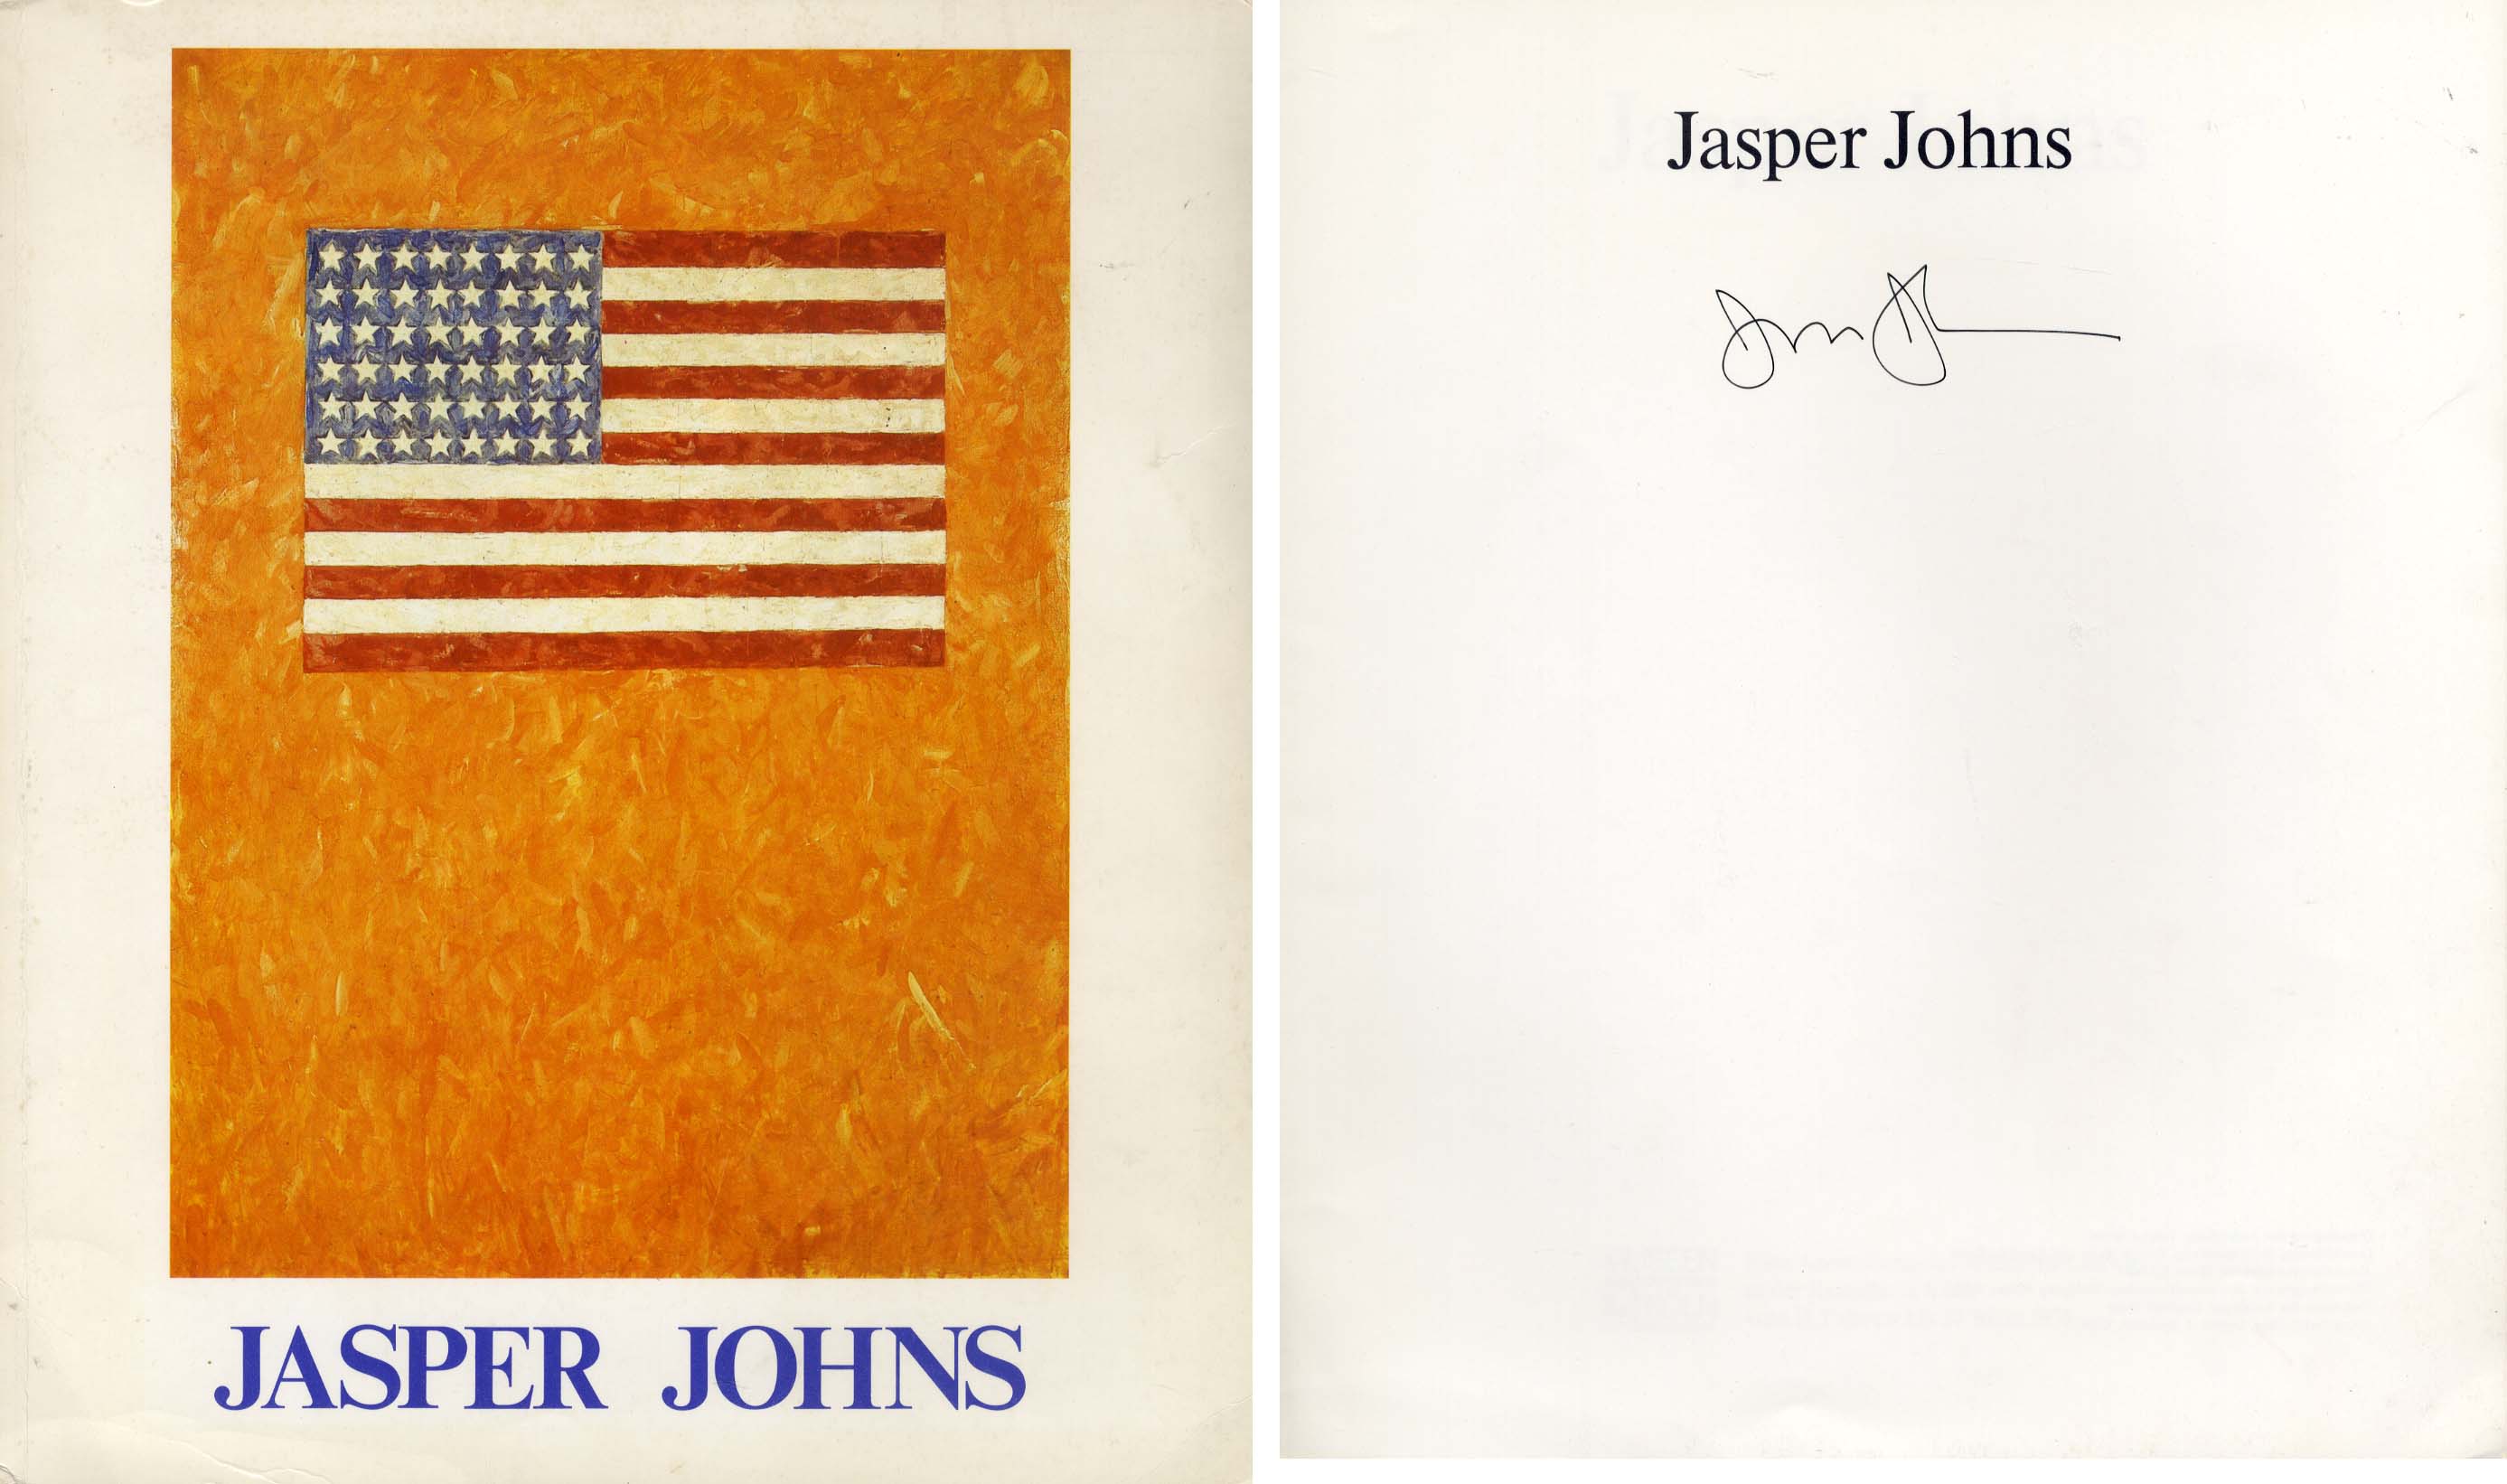 Jasper Johns Autograph Autogramm | ID 7884701171861